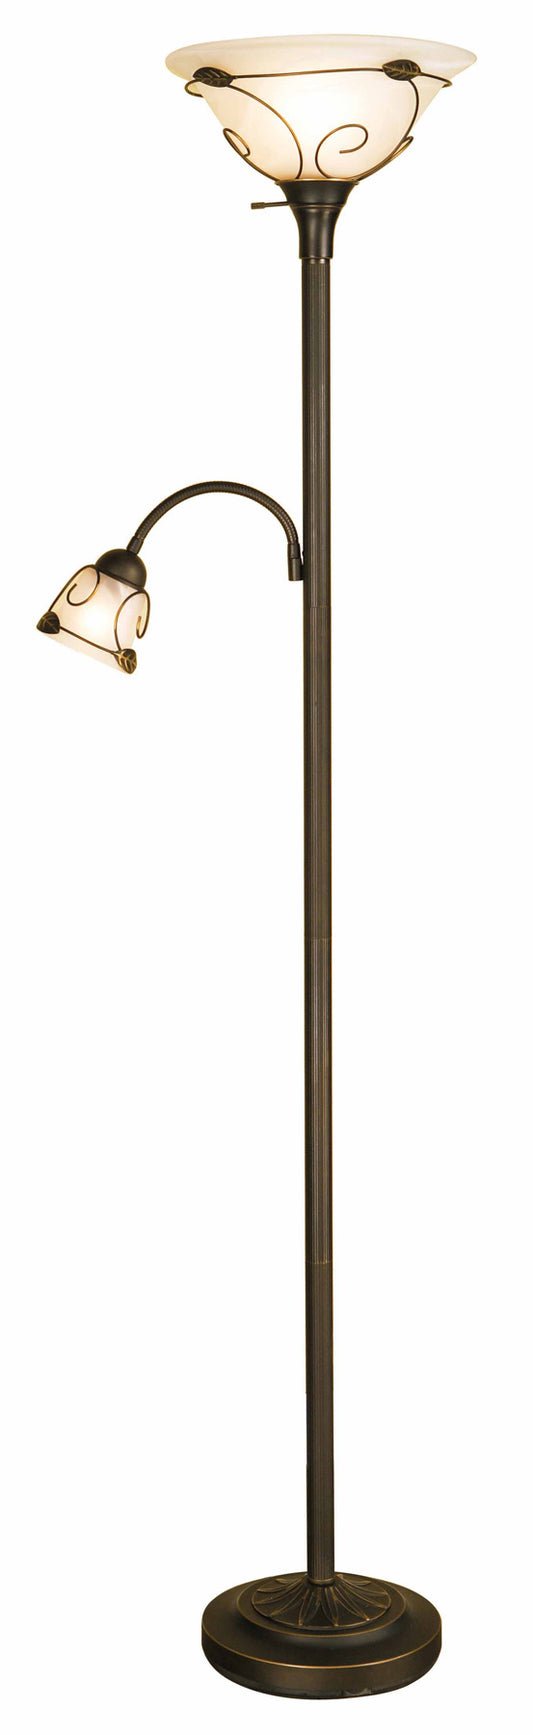 Normande Lighting JM1-884 71" Incandescent Torchiere Floor Lamp With Side Reading Lamp